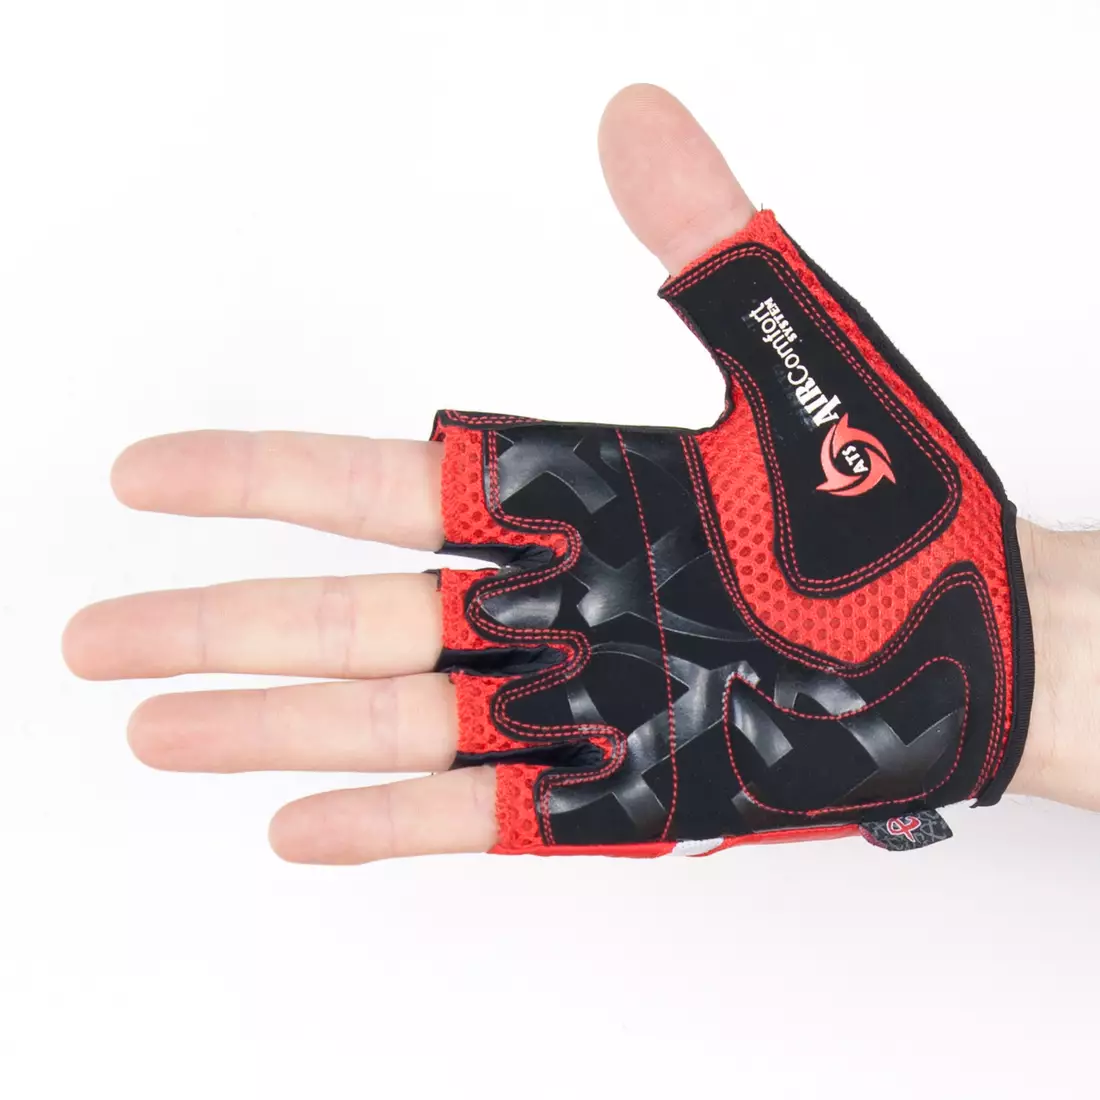 DEKO cycling gloves Gel Red DKSG-1014